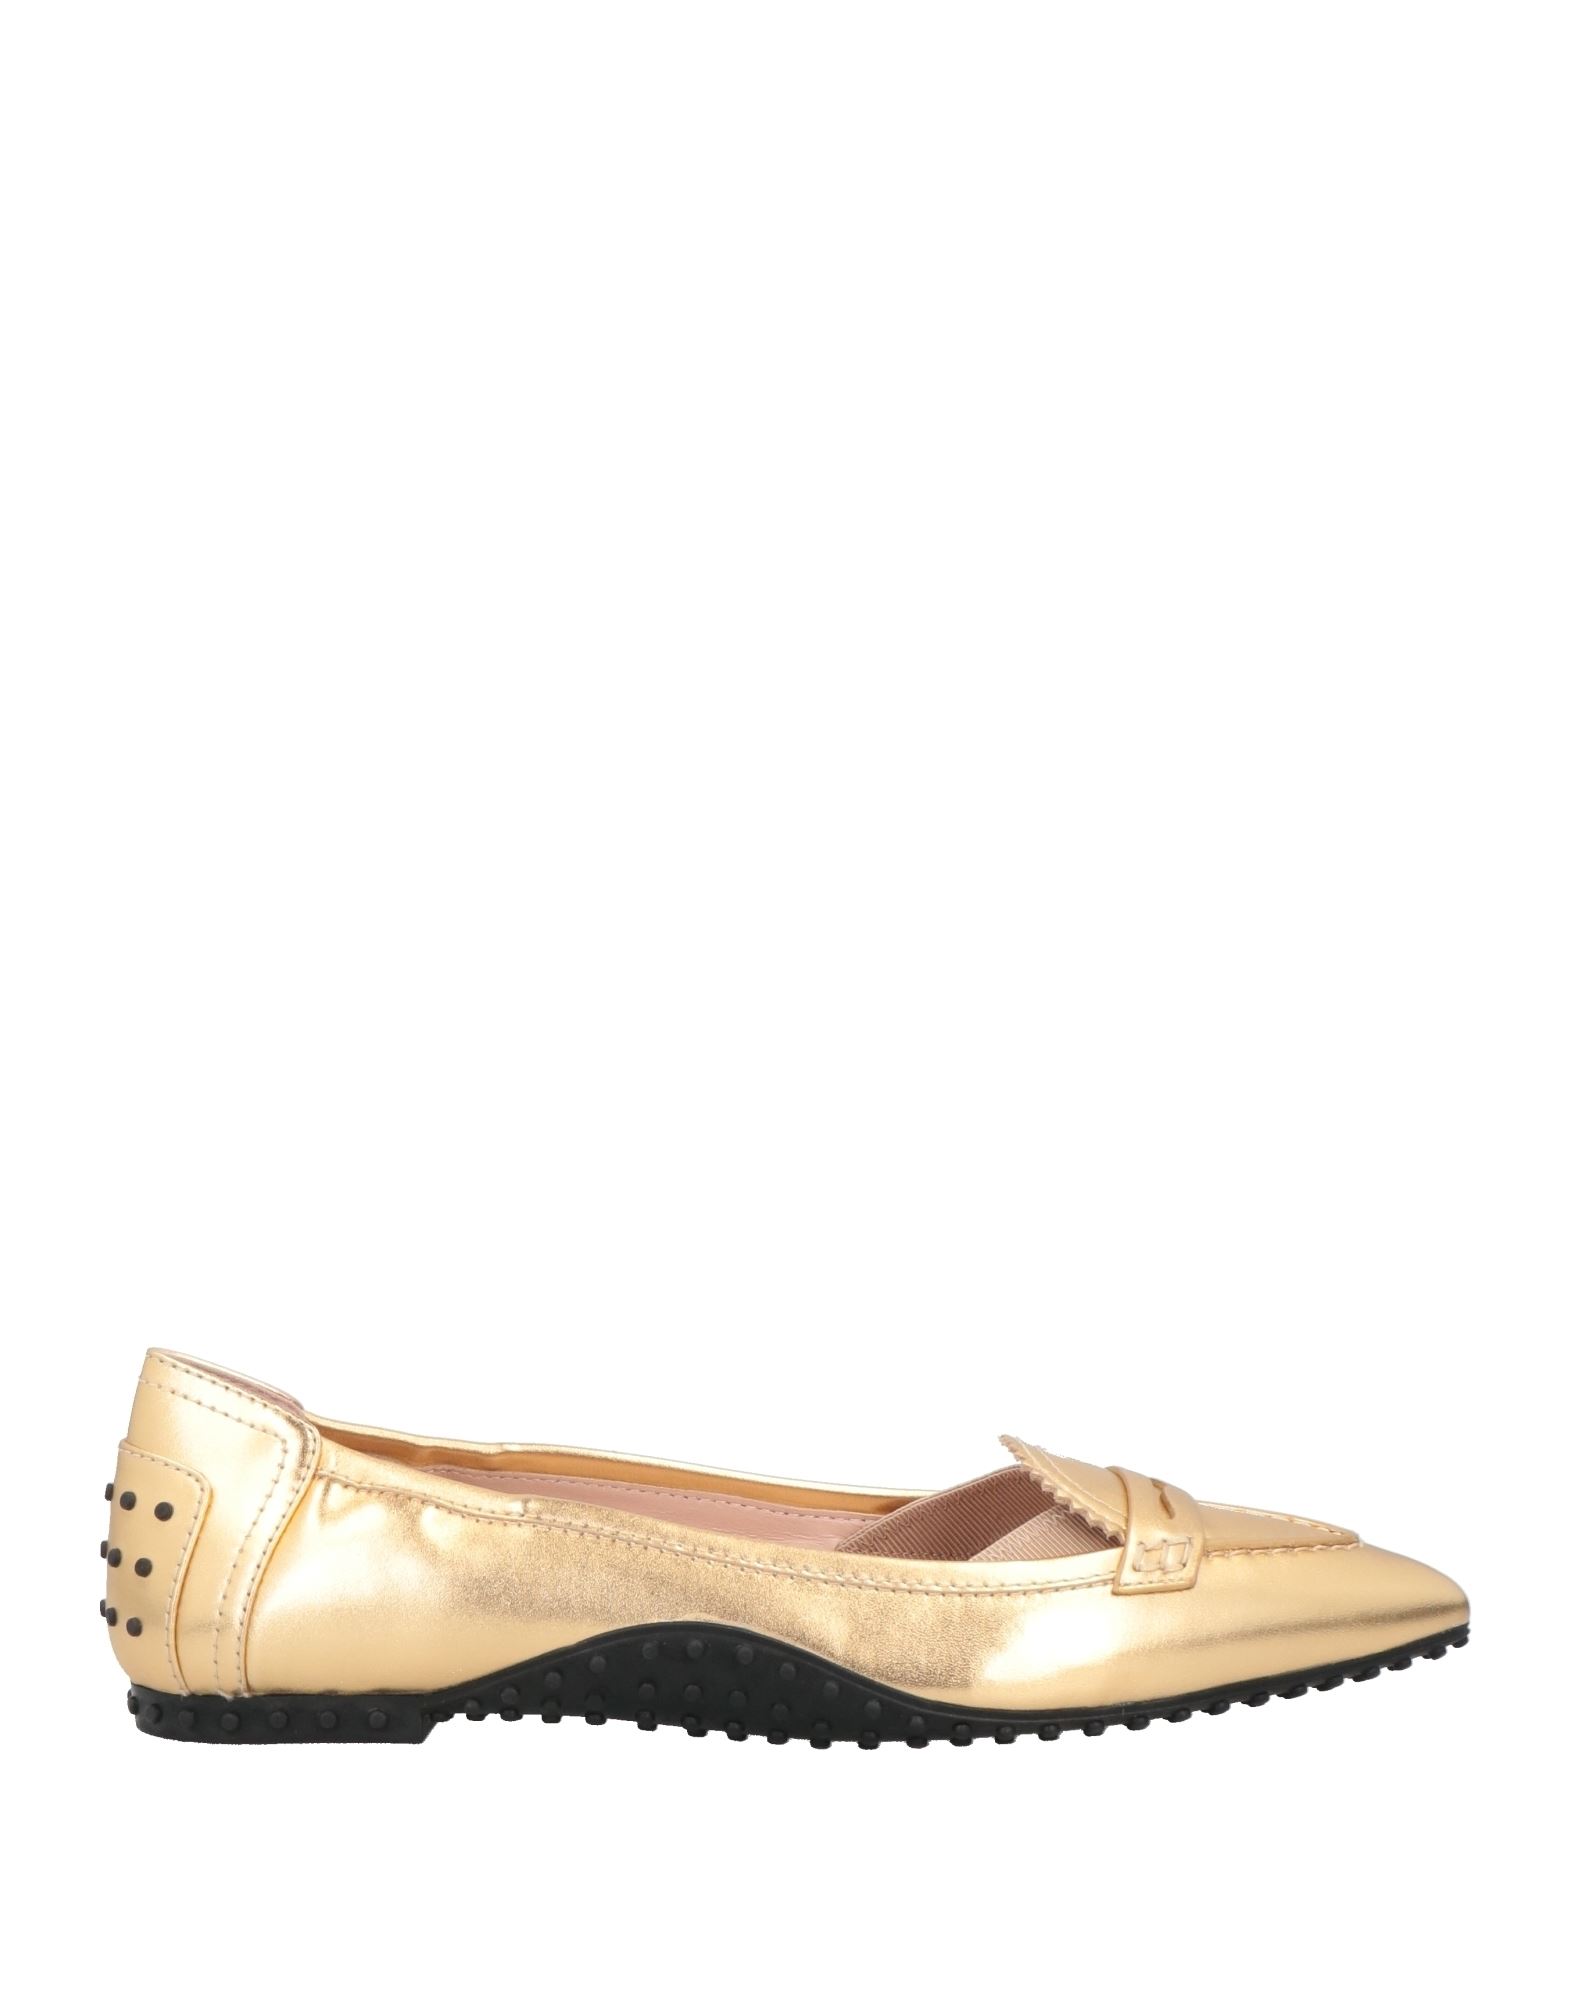 Alessandro Dell'acqua X Tod's Loafers In Gold